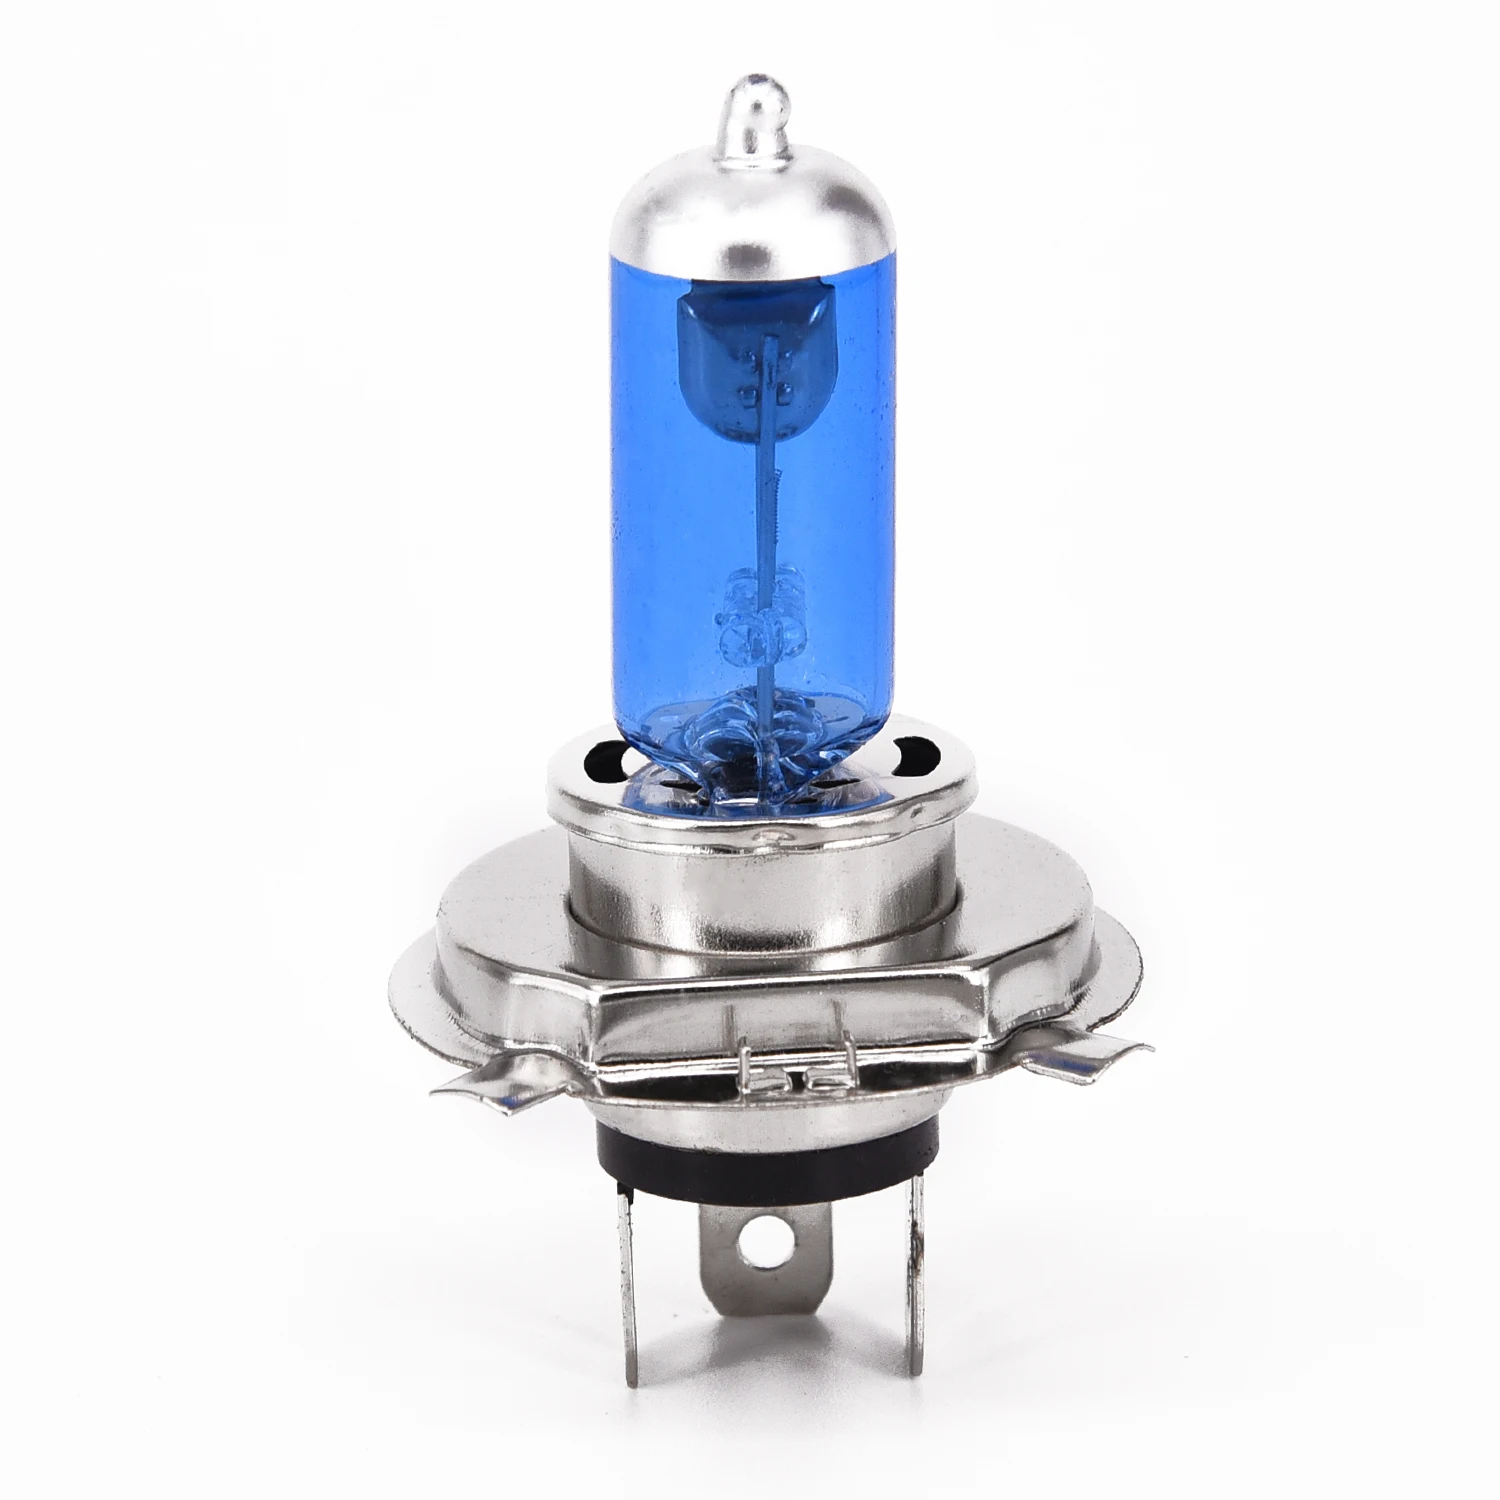 

2Pcs H4 100W 6000K Car Xenon Gas Halogen Headlight Lamp Bulbs Blue Shell Super Bright Daytime Running Lights Accessories